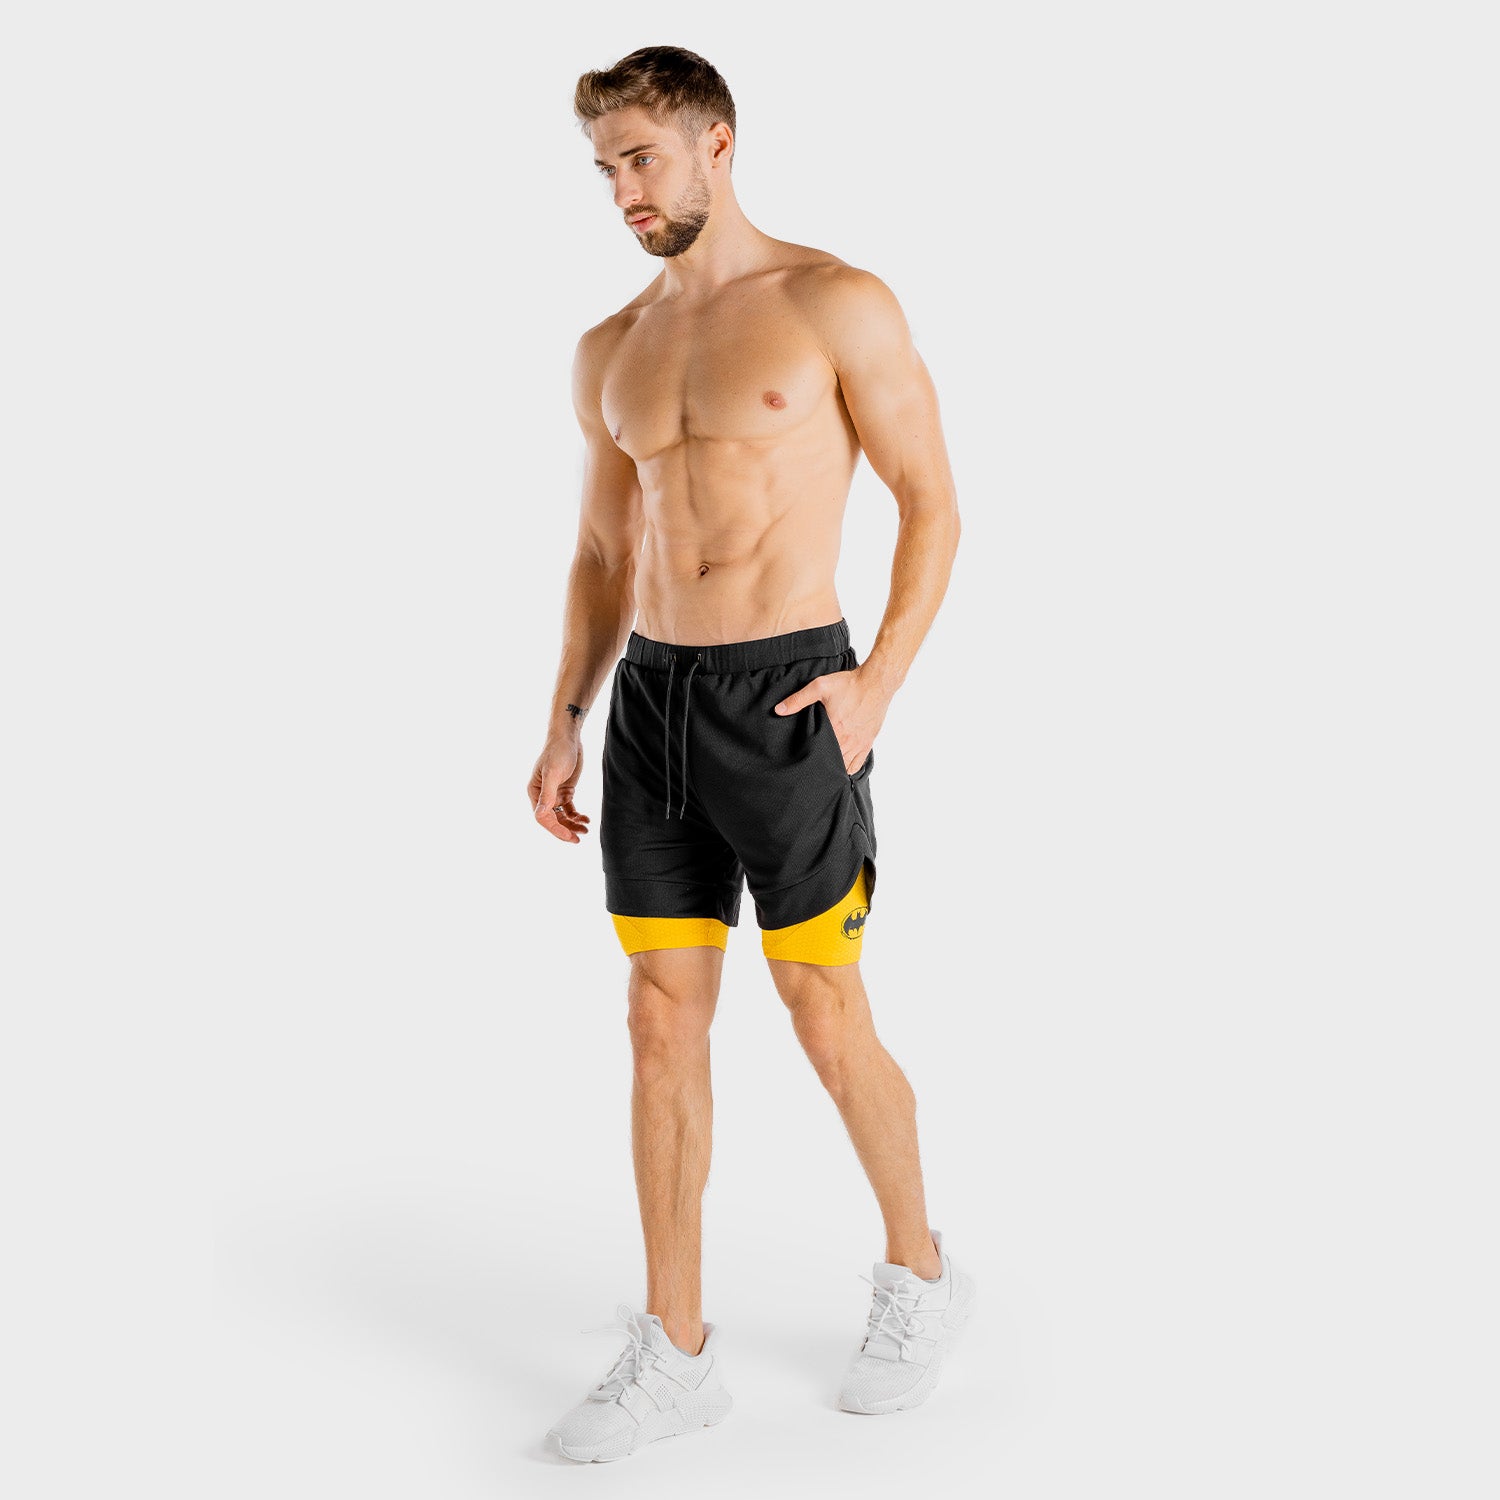 squatwolf-gym-wear-batman-gym-shorts-black-workout-short-for-men